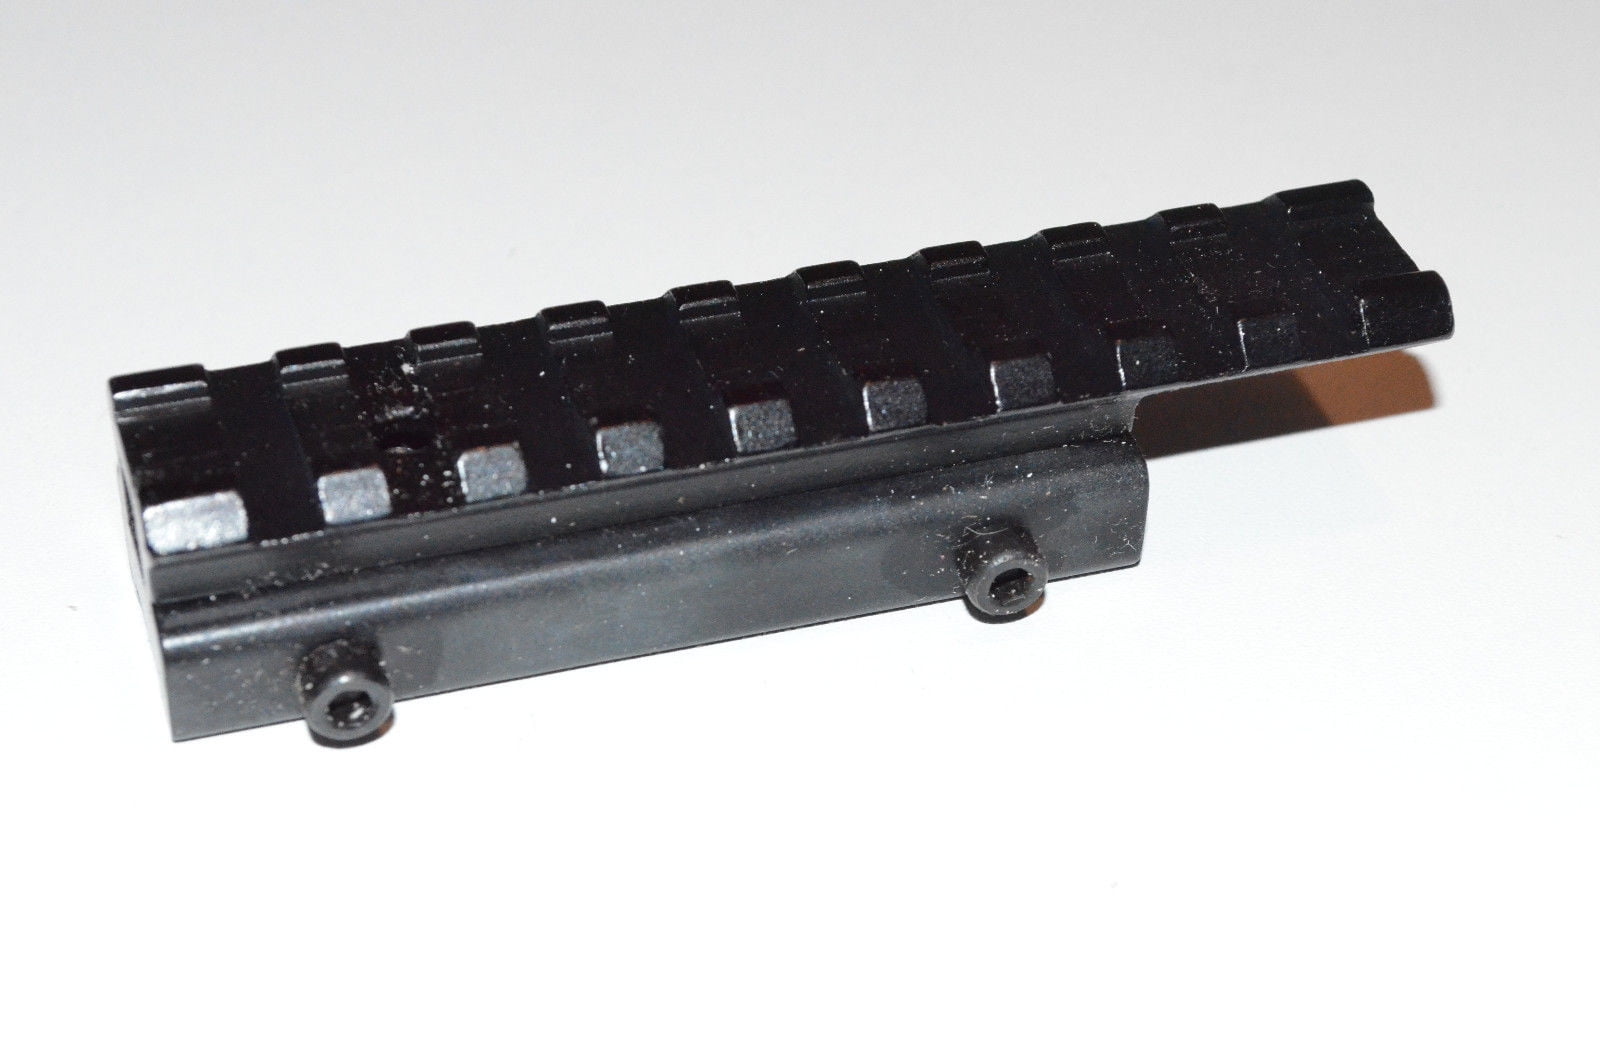 Tri-Rail Dovetail to Weaver Picatinny Rail Adapter #302 